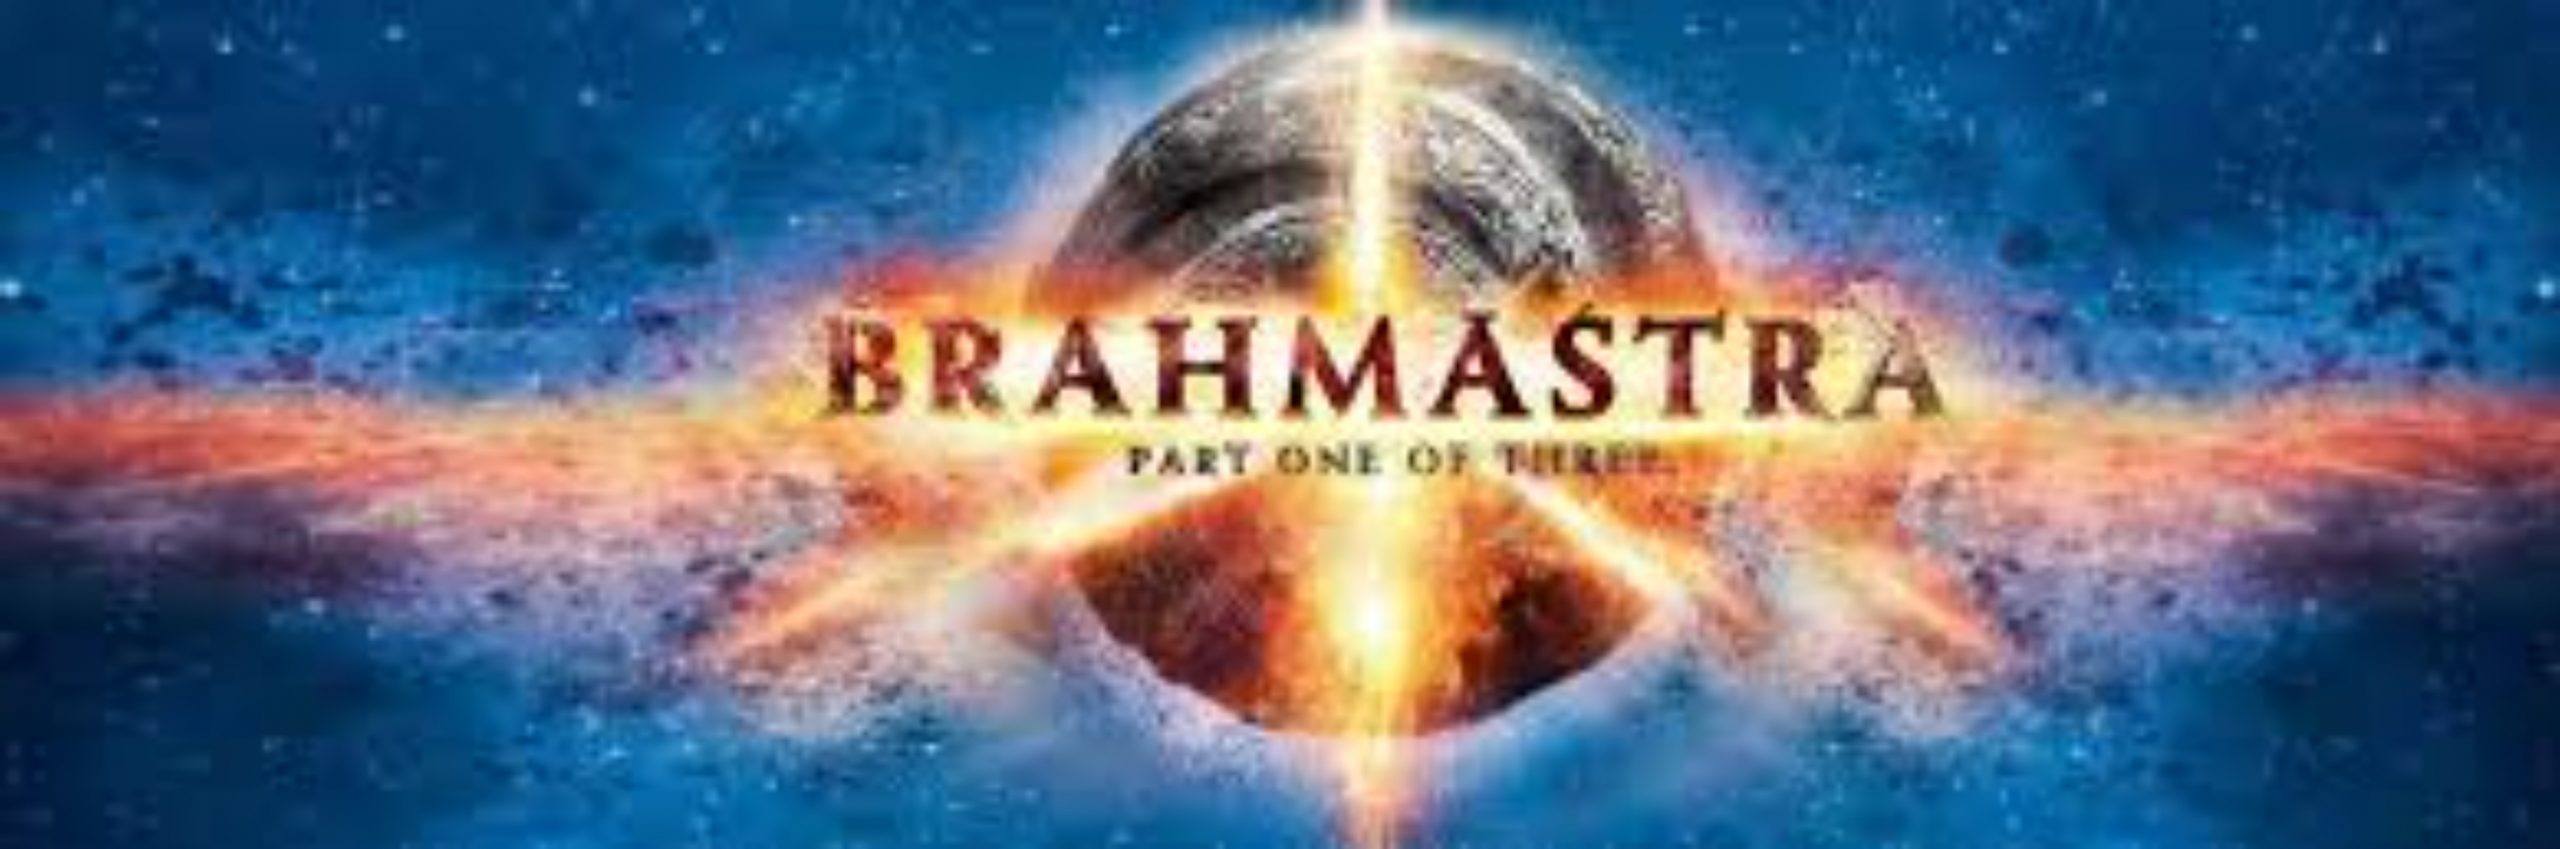 Brahmastra Release Date announced